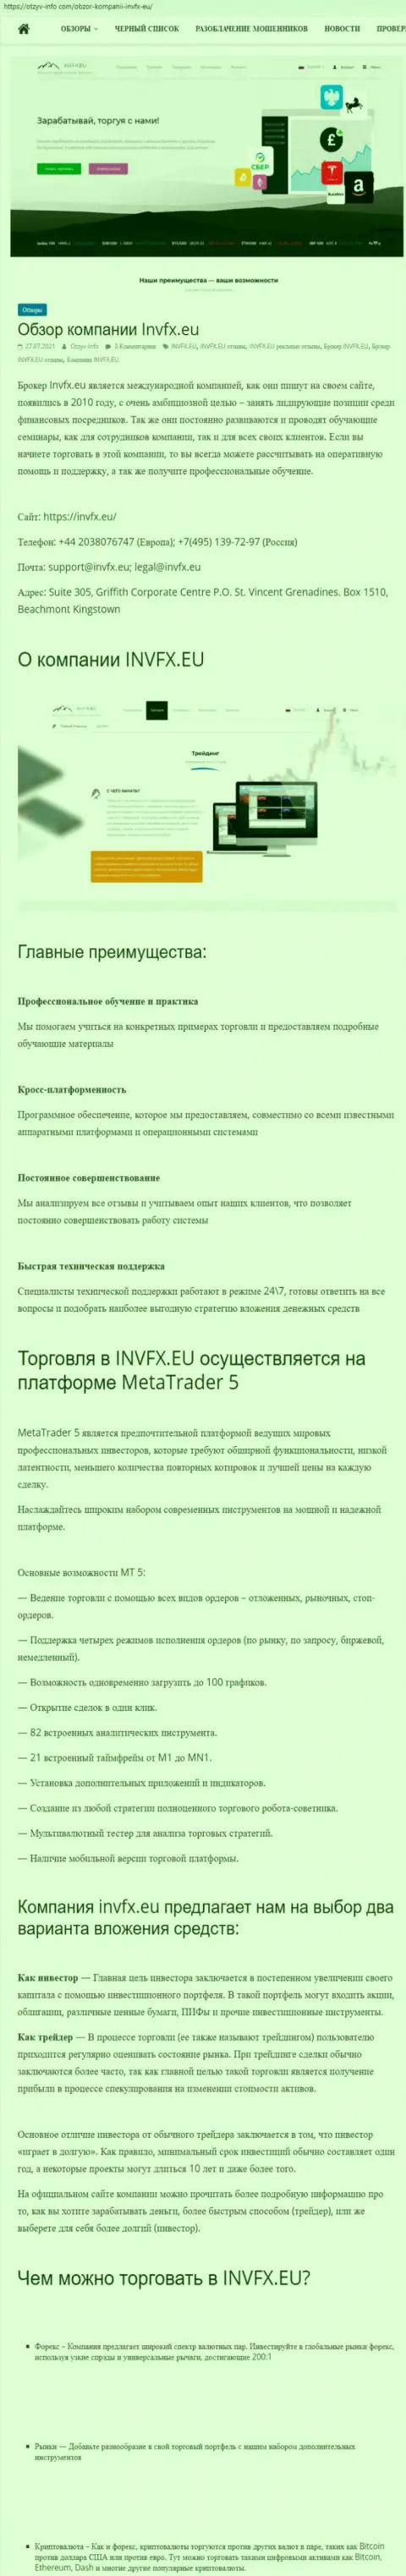 Портал otzyv info com опубликовал статью о ФОРЕКС-брокере Invesco Limited